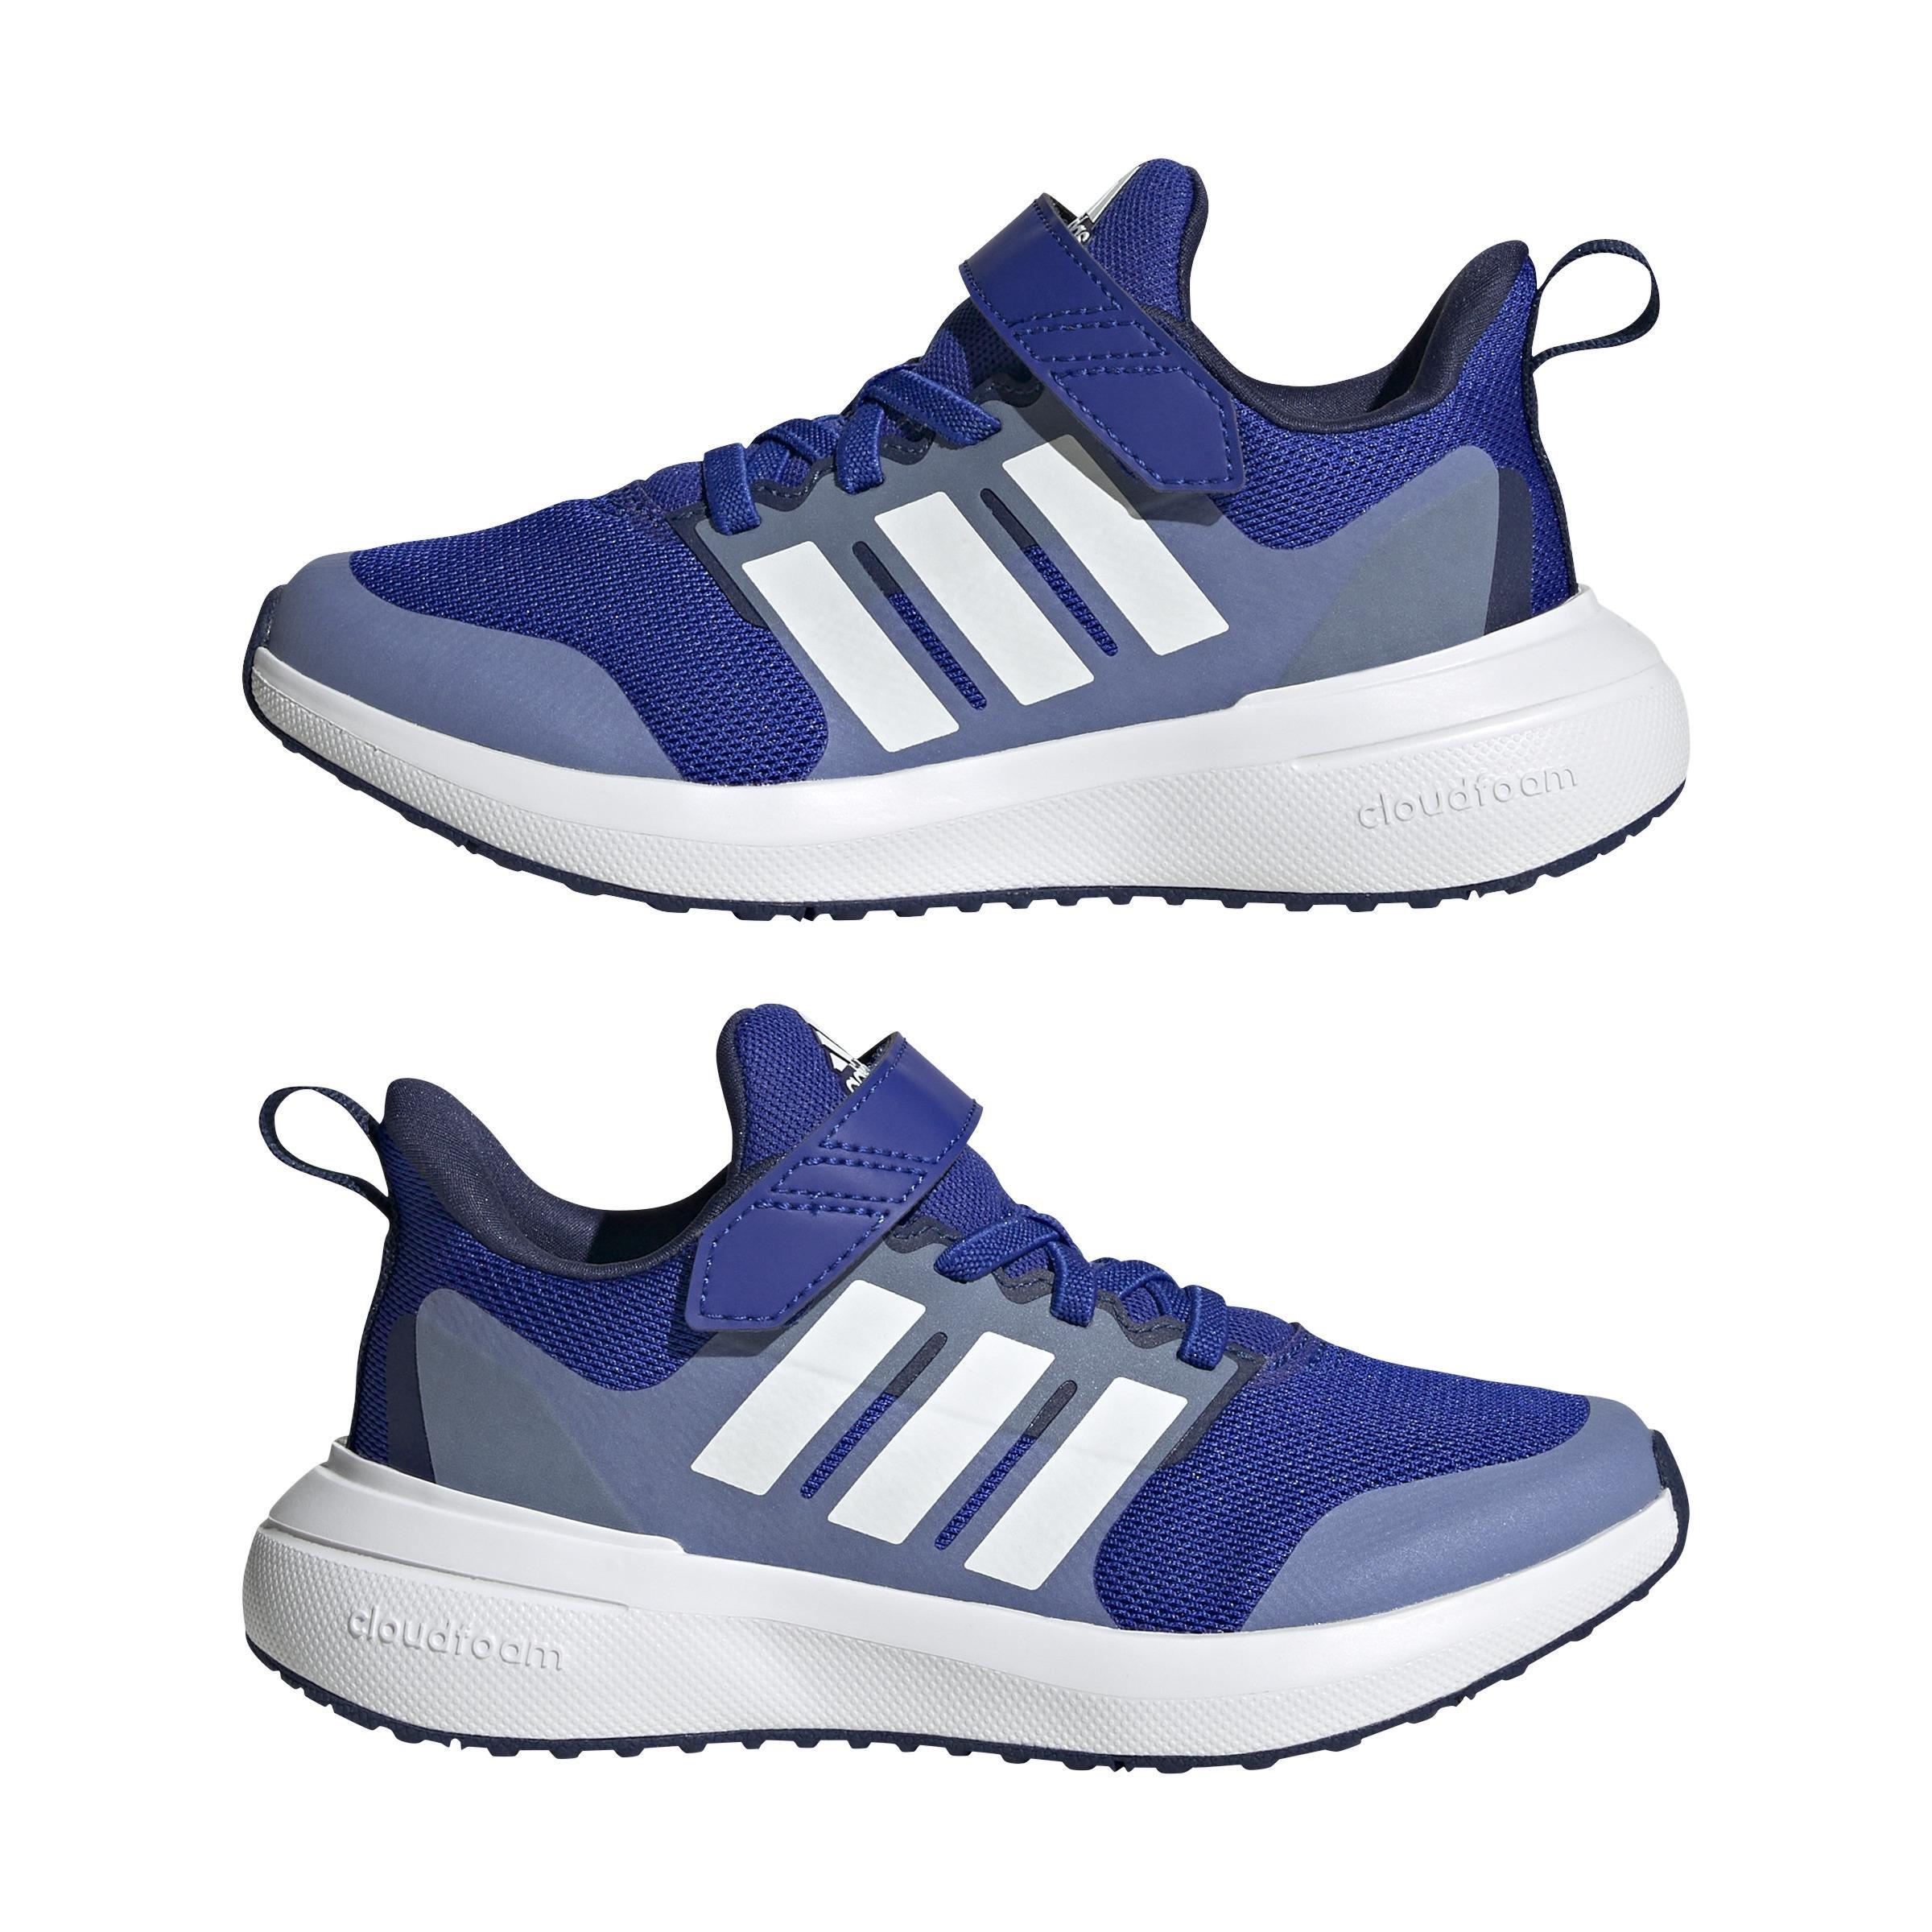 adidas - Unisex Kids Fortarun 2.0 Cloudfoam Elastic Lace Shoes, Blue